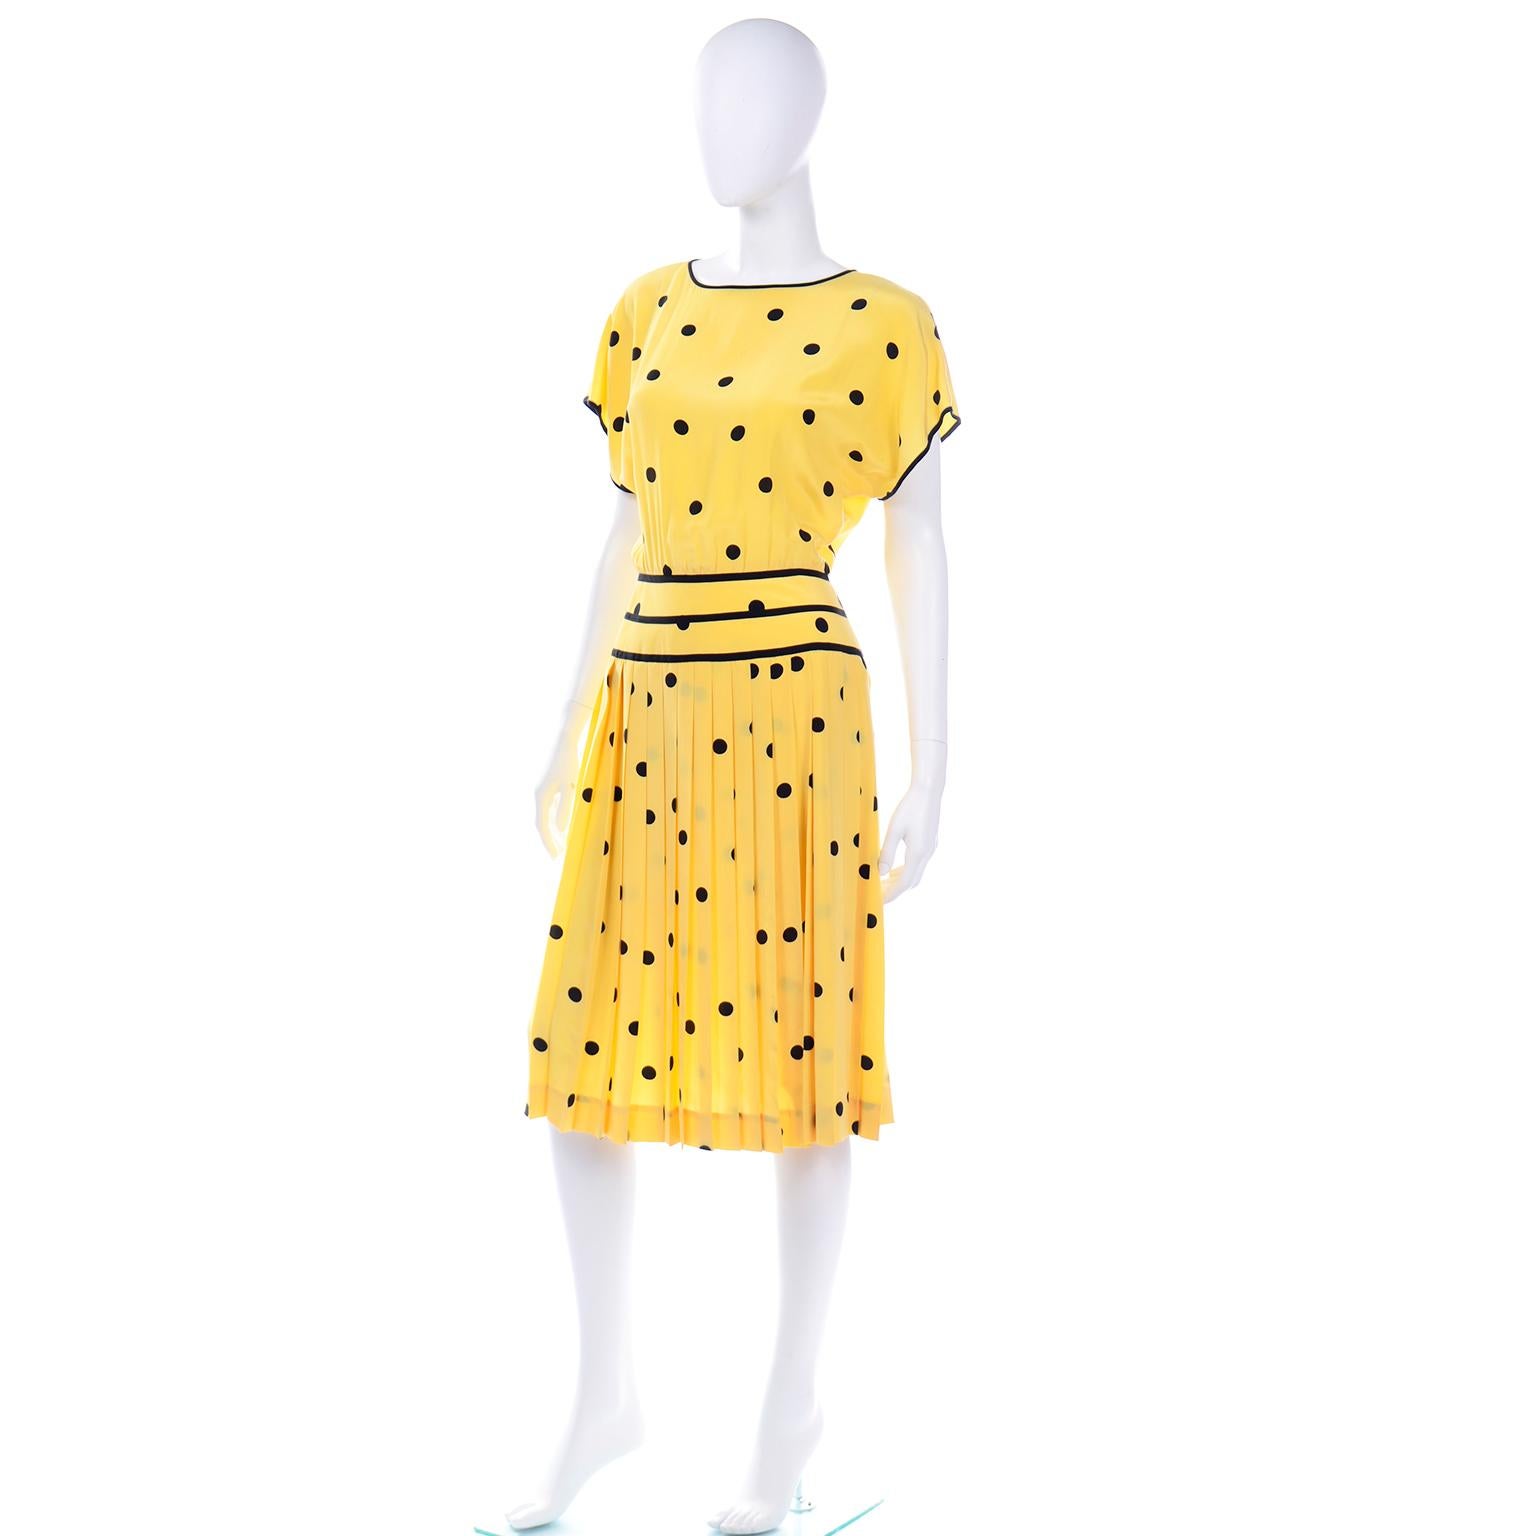 yellow dress with black polka dots